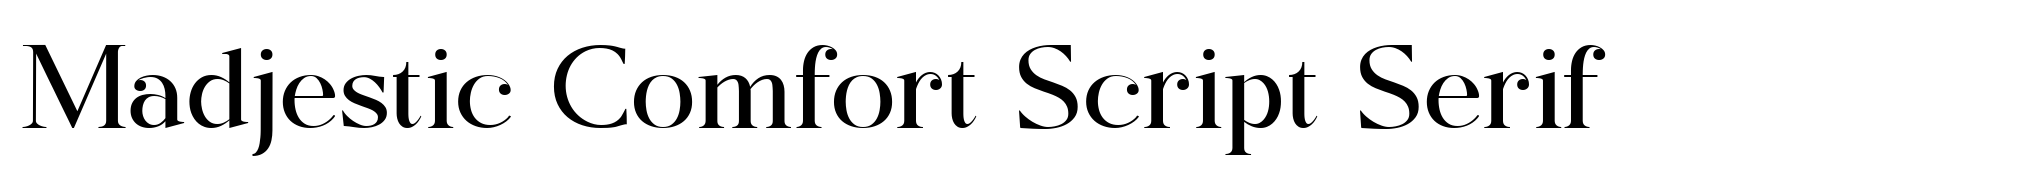 Madjestic Comfort Script Serif image